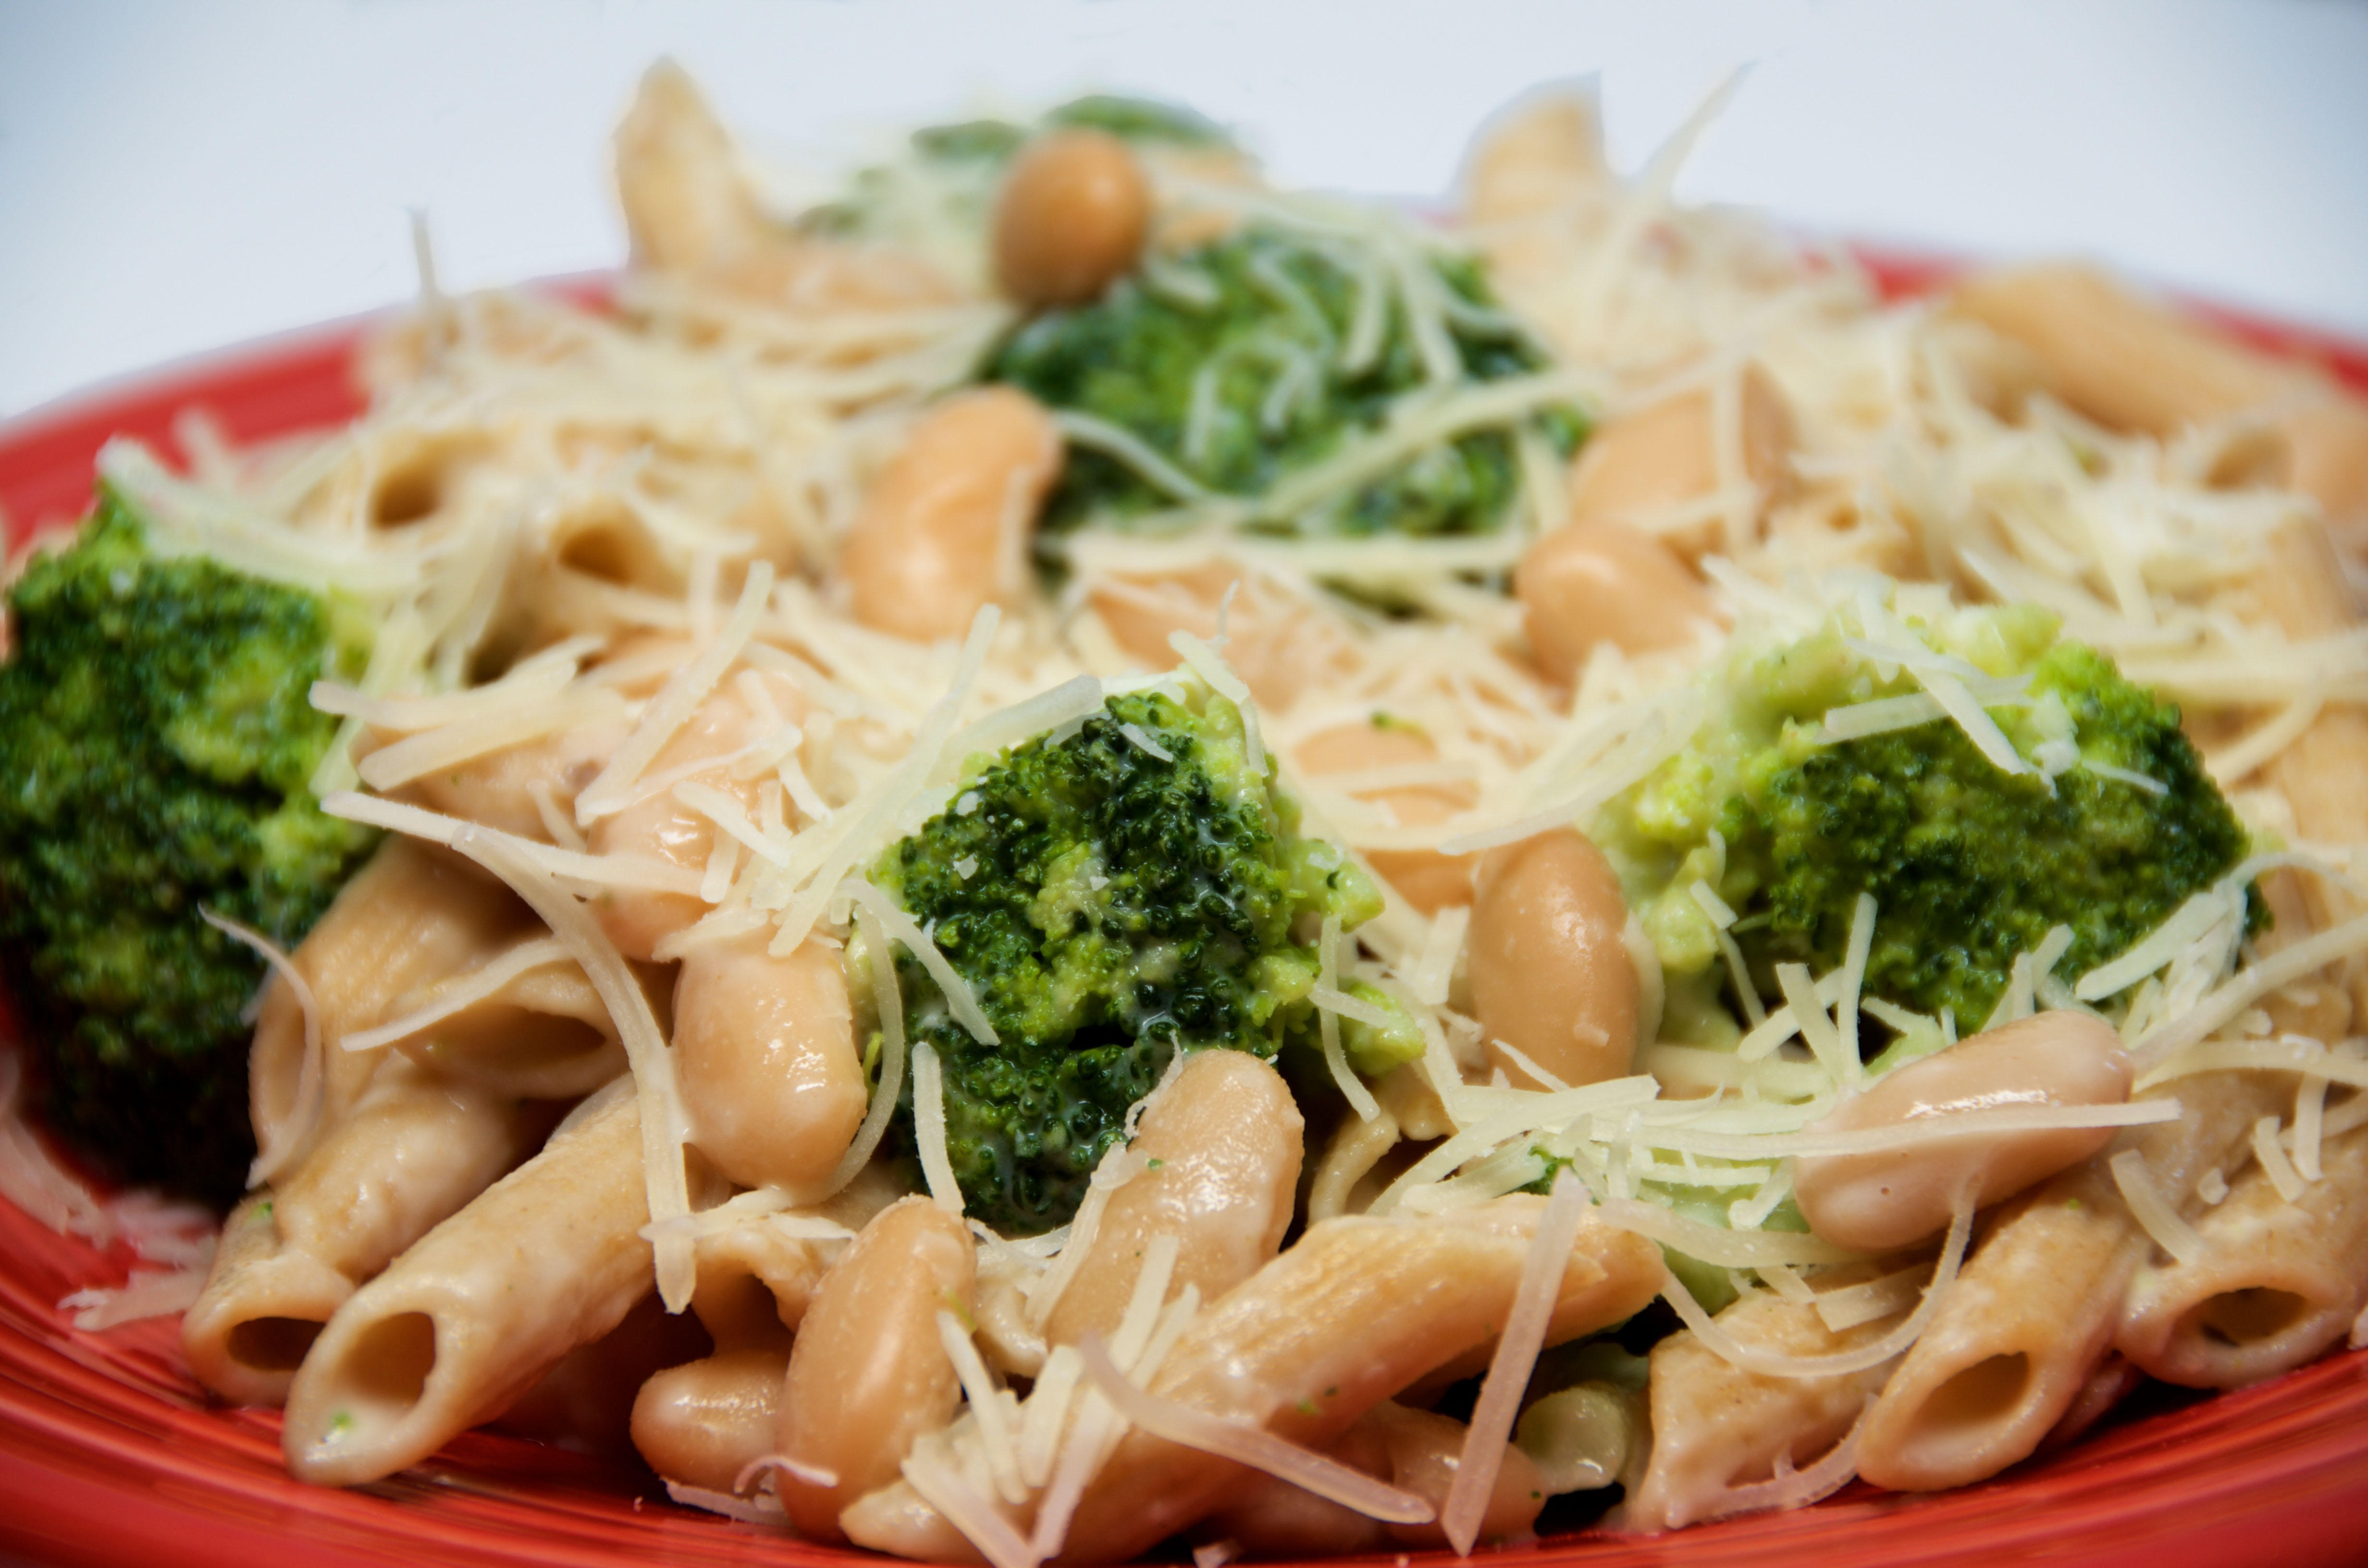 An image showcasing the Cheesy Bean and Broccoli pasta recipe